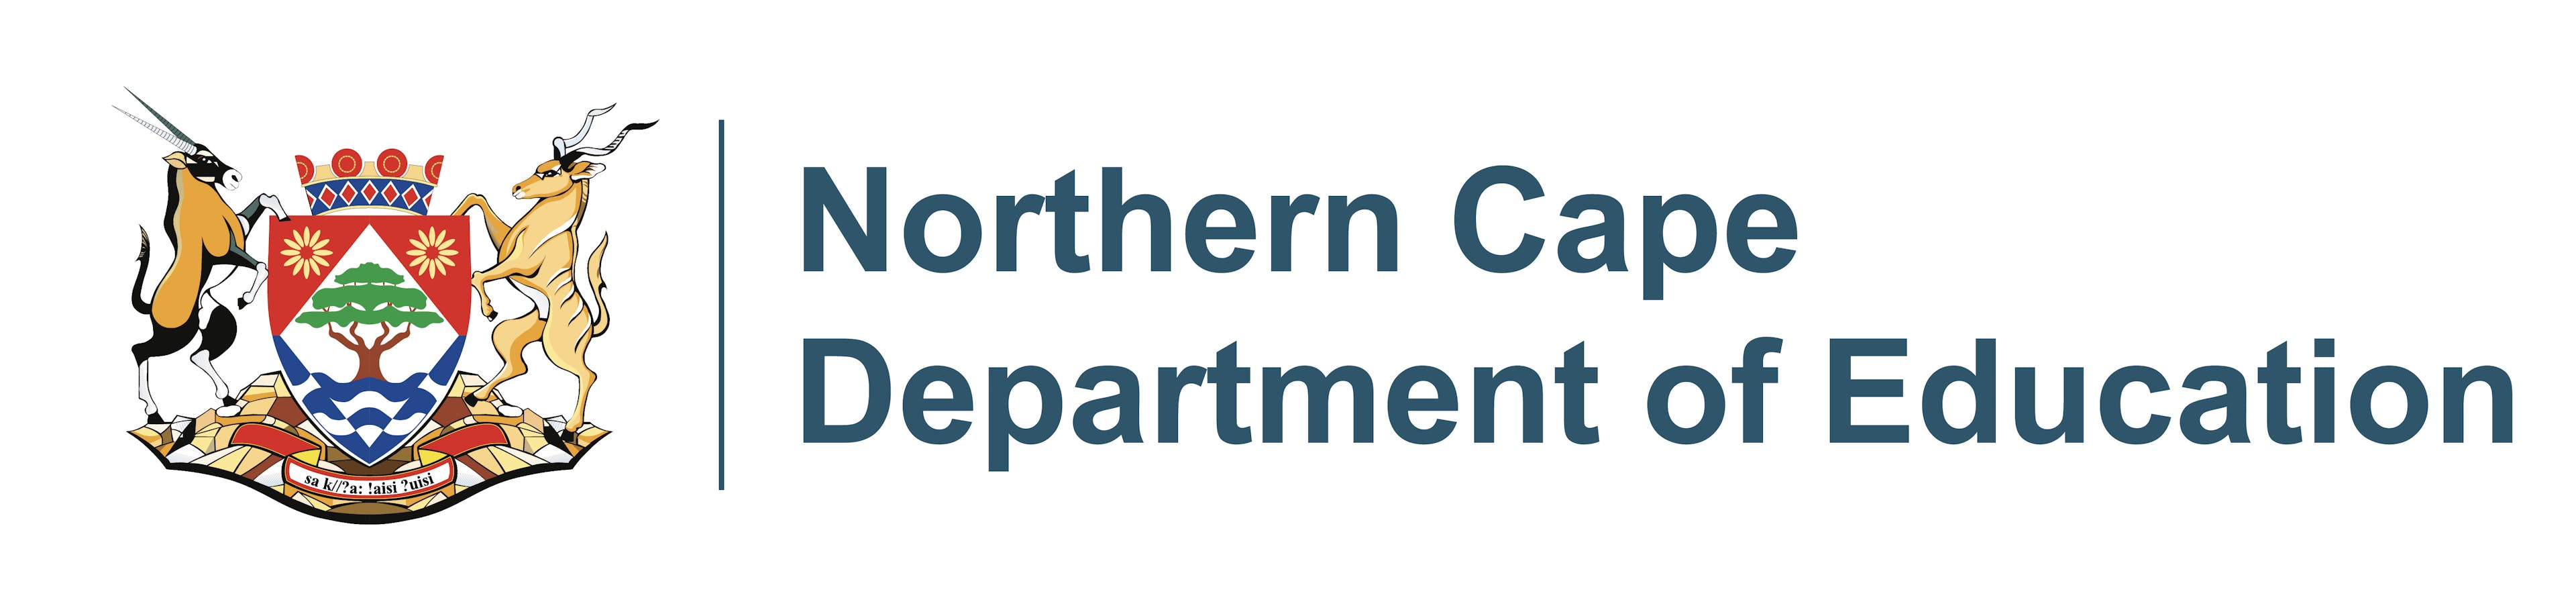 Department_of_Education_(logo)-01